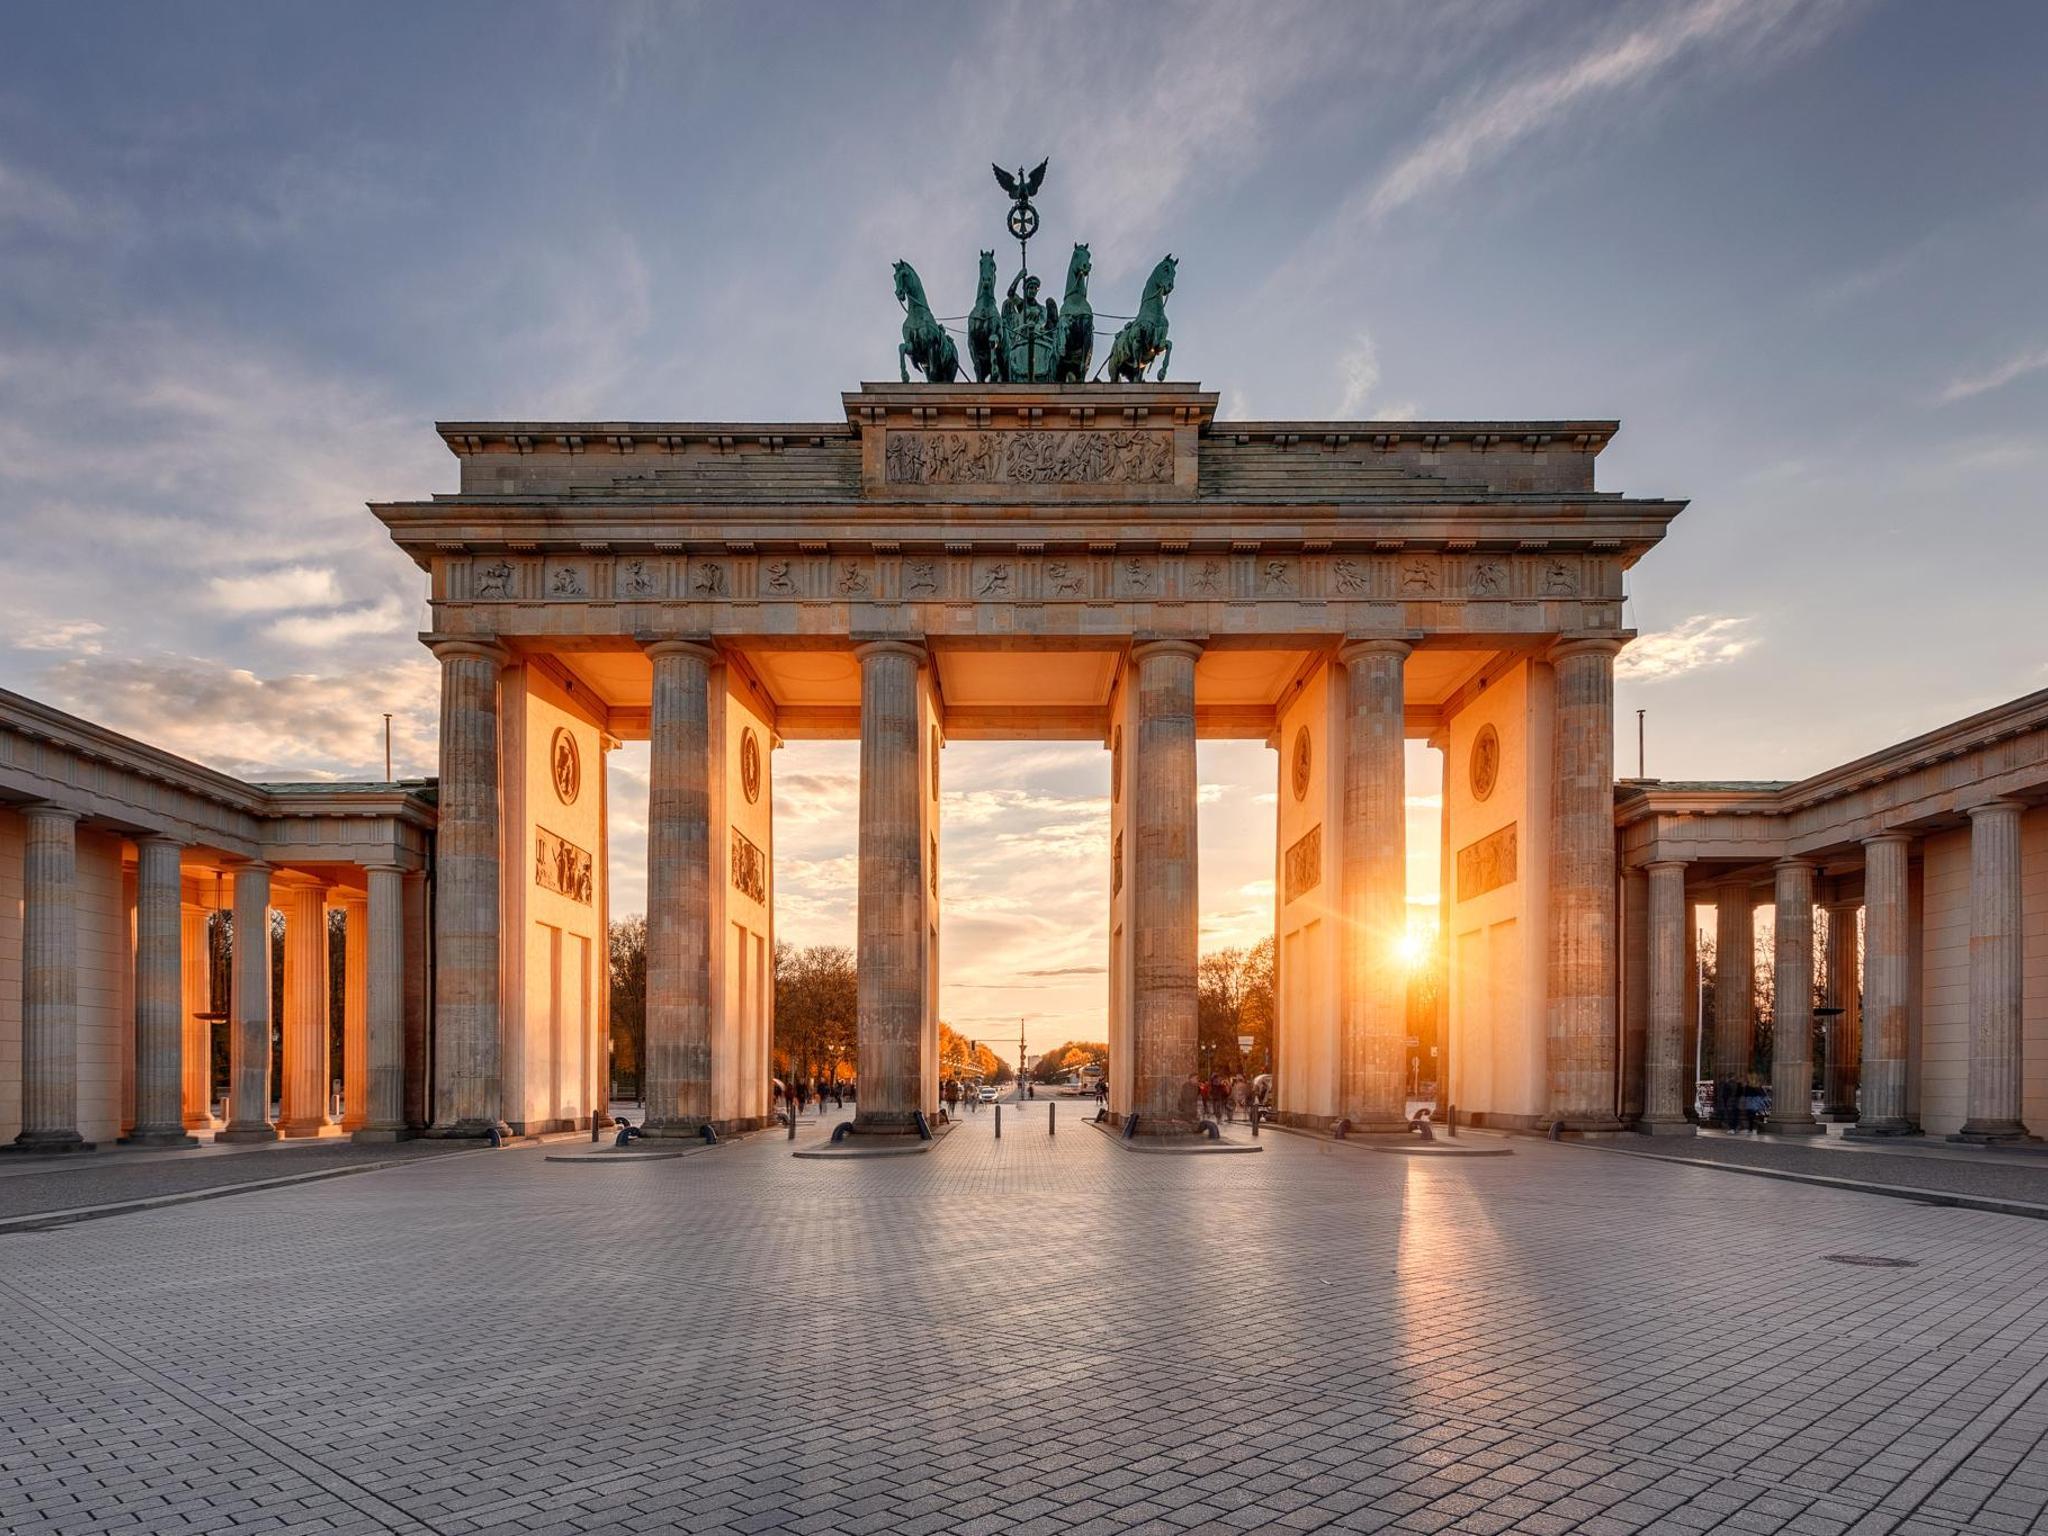 Where to stay near Berlin's Brandenburg Gate